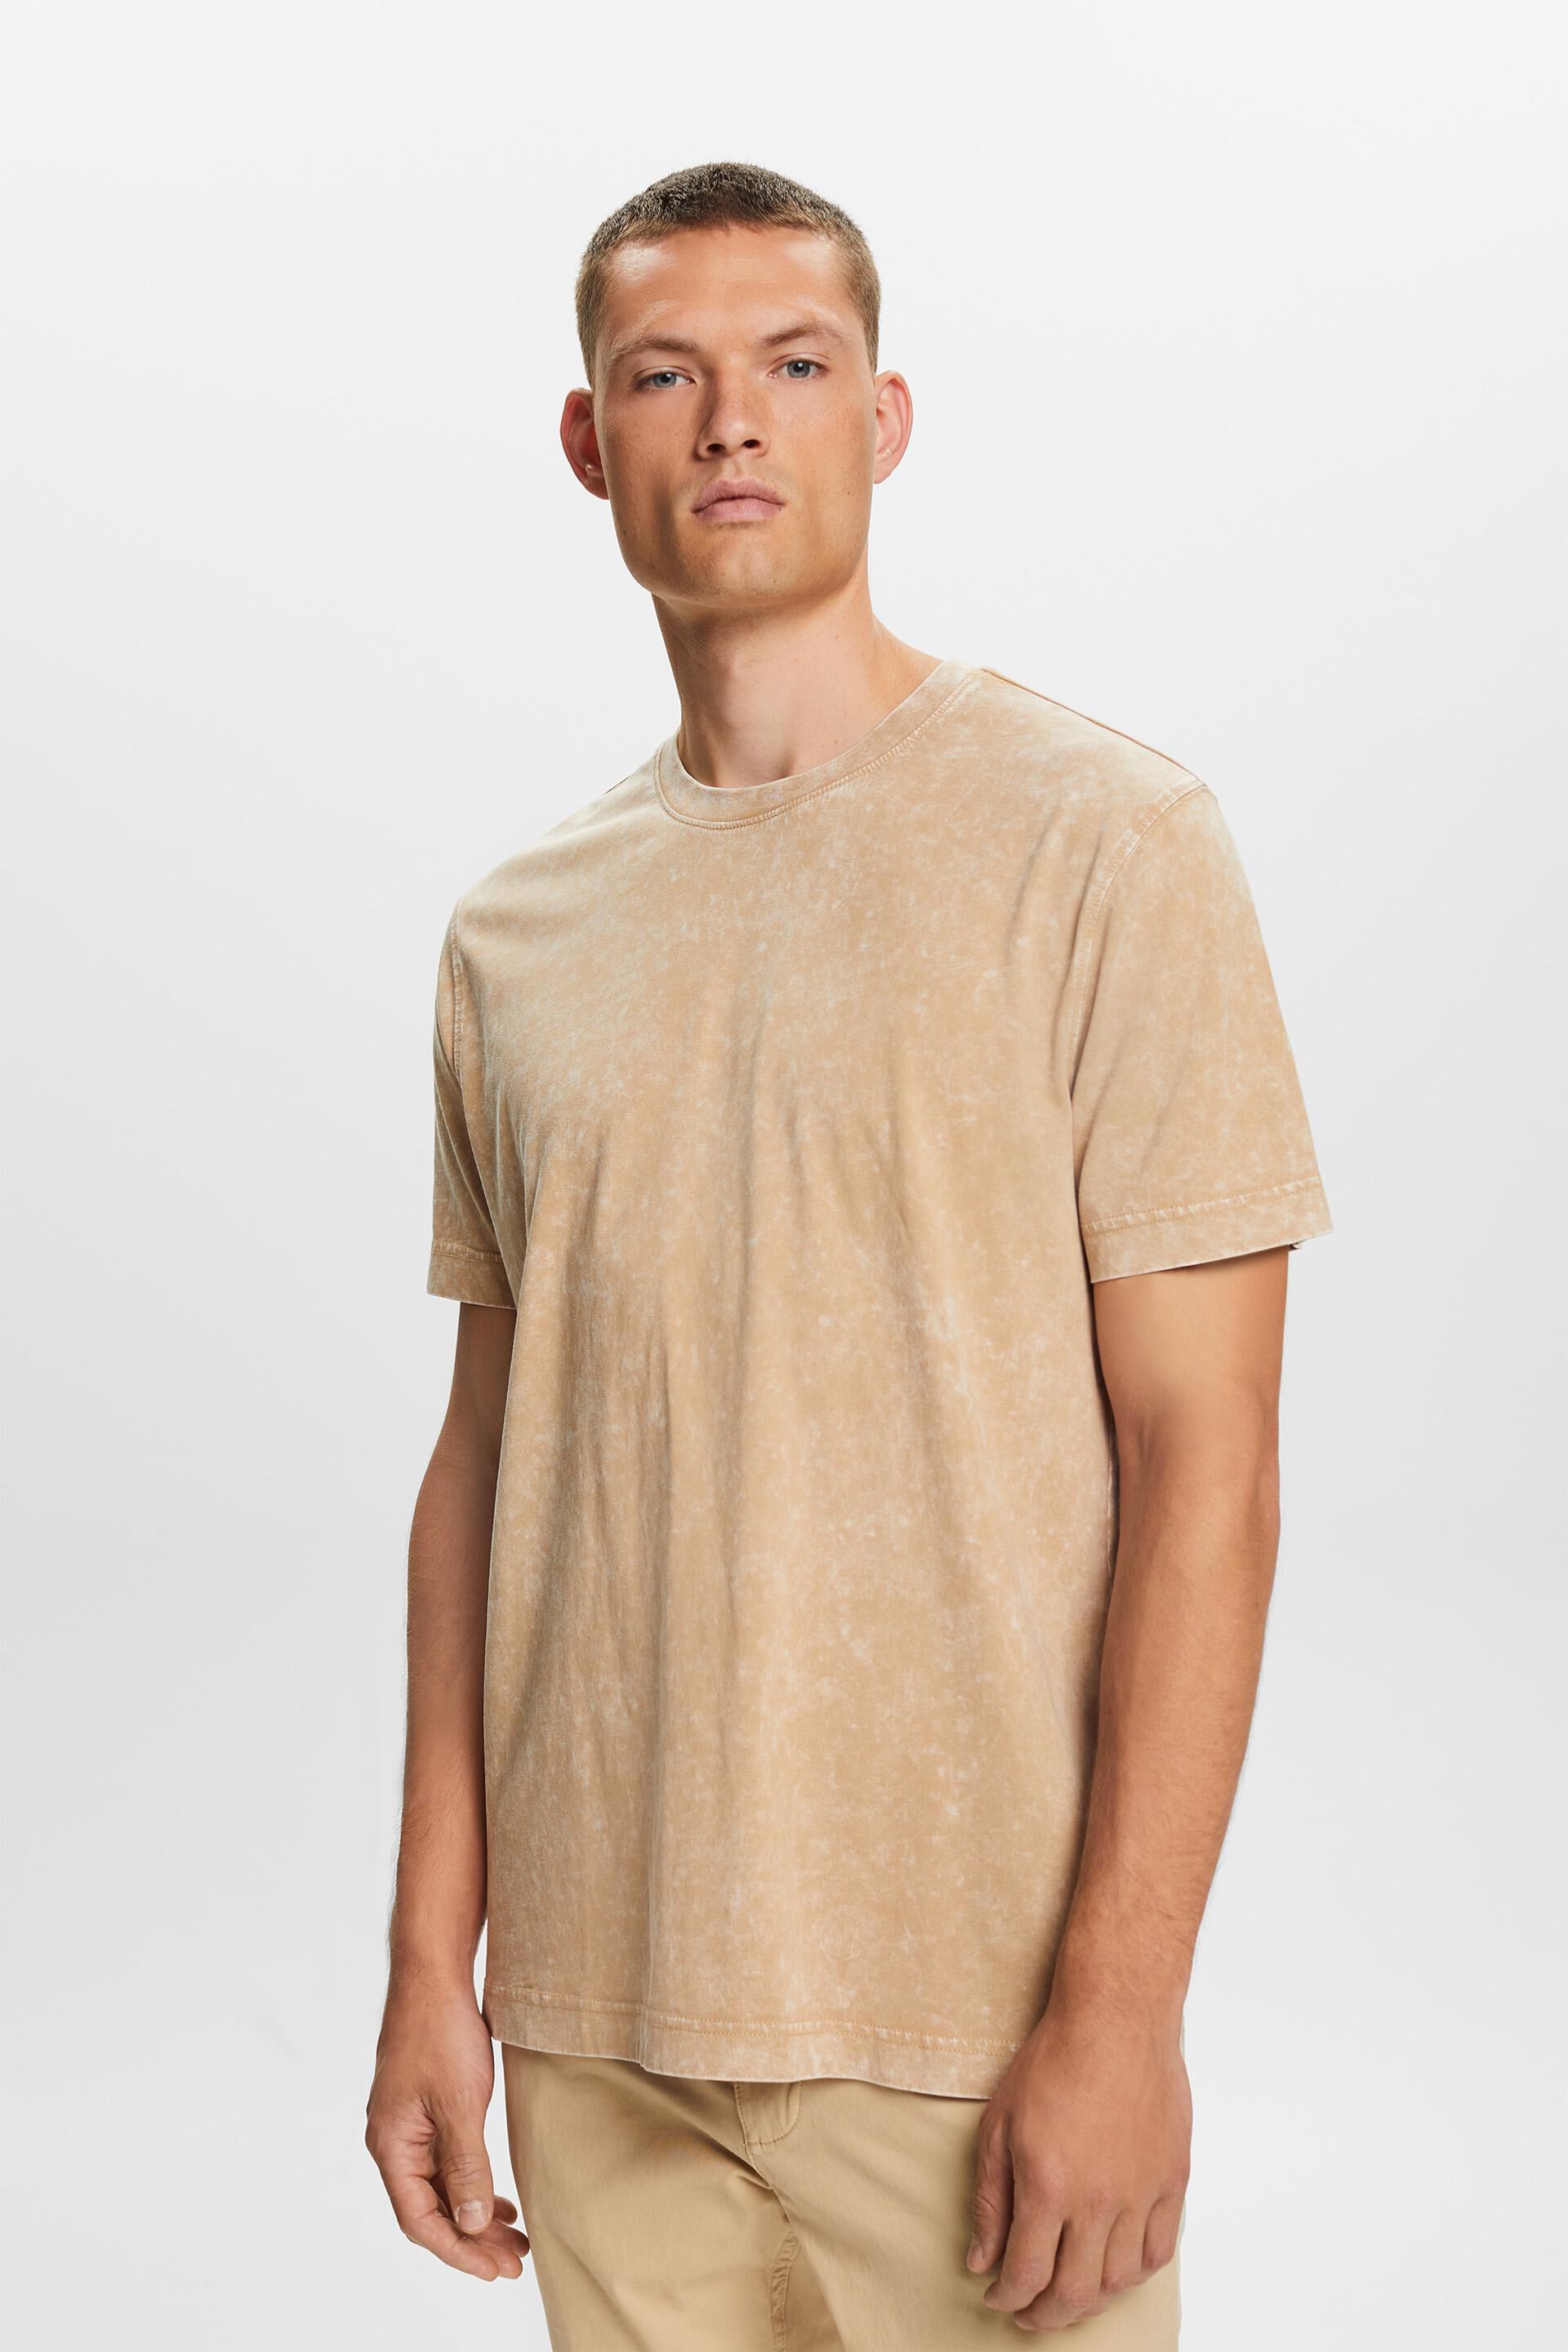 Esprit T-shirt, cotton 100% washed Stone